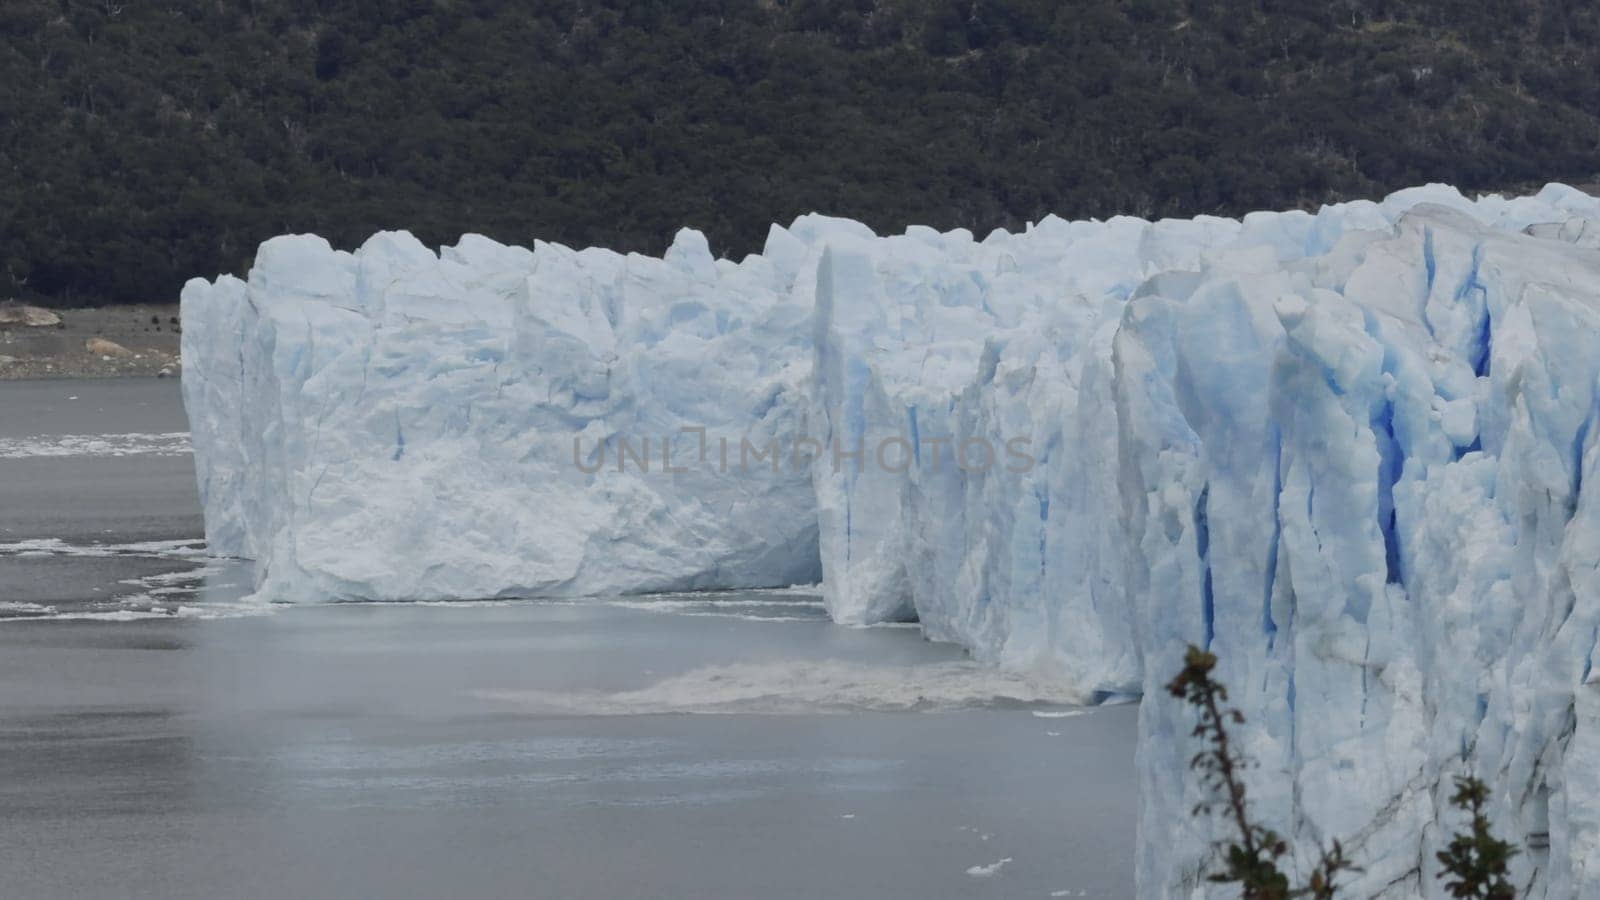 Majestic Perito Moreno Glacier Calving Creating Waves by FerradalFCG